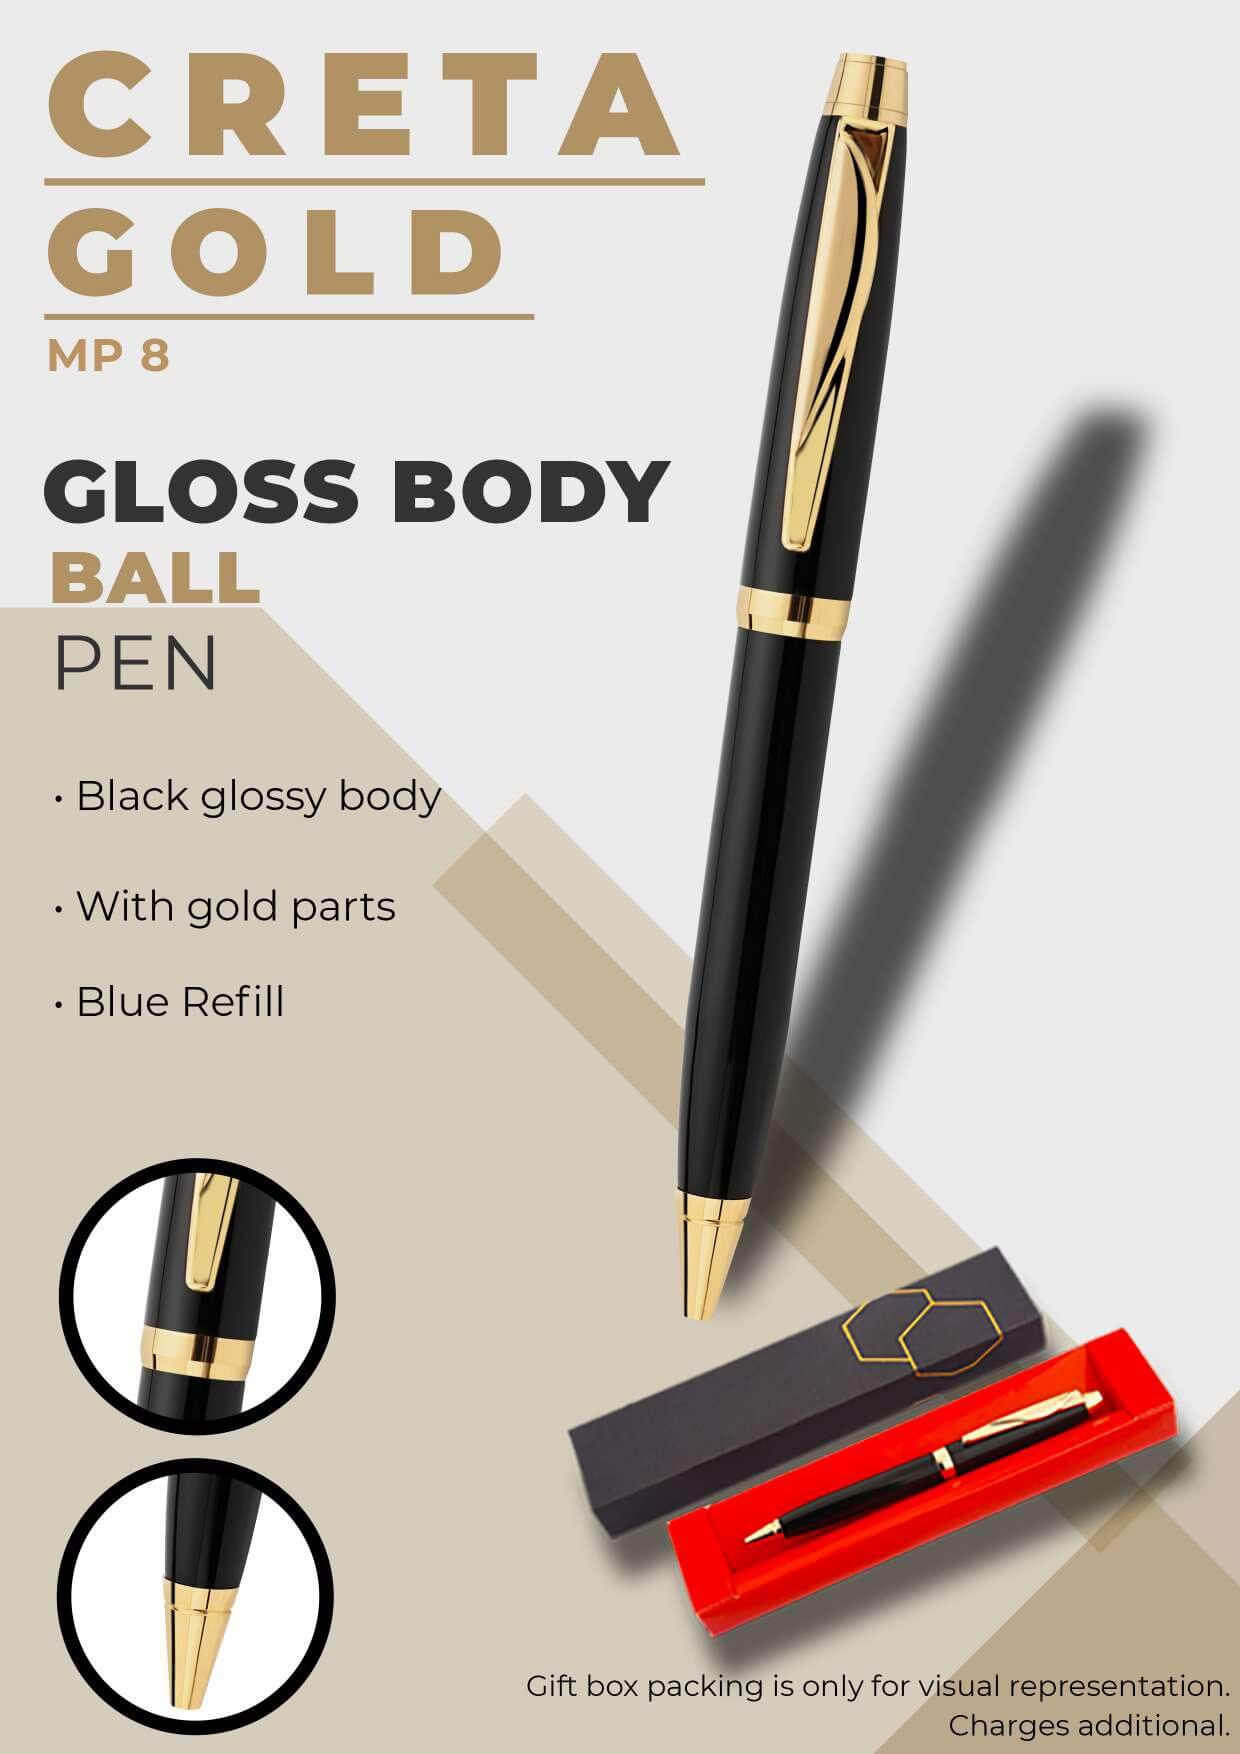 Glossy Body Ball Pen Creta Gold